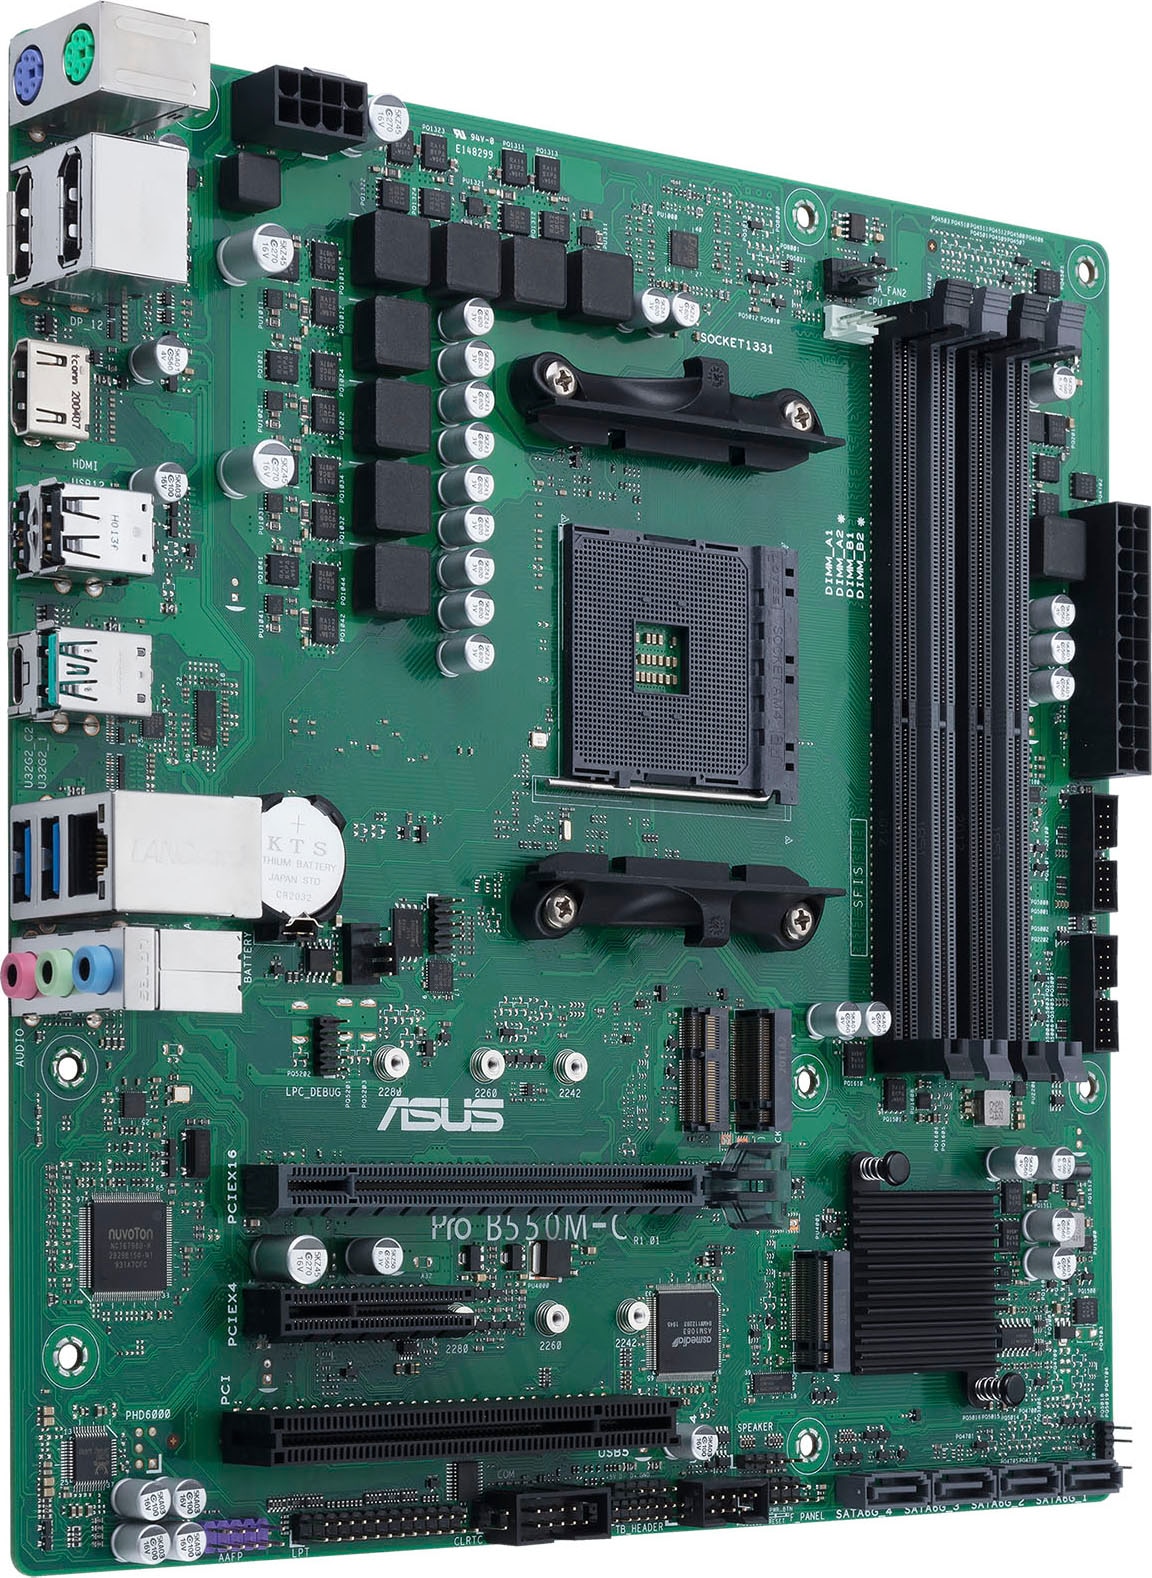 Asus Mainboard »B550M-C/CSM«, B550, Ryzen AM4, Micro-ATX, 2x M.2, PCIe 4.0, 1Gbit/s Ethernet